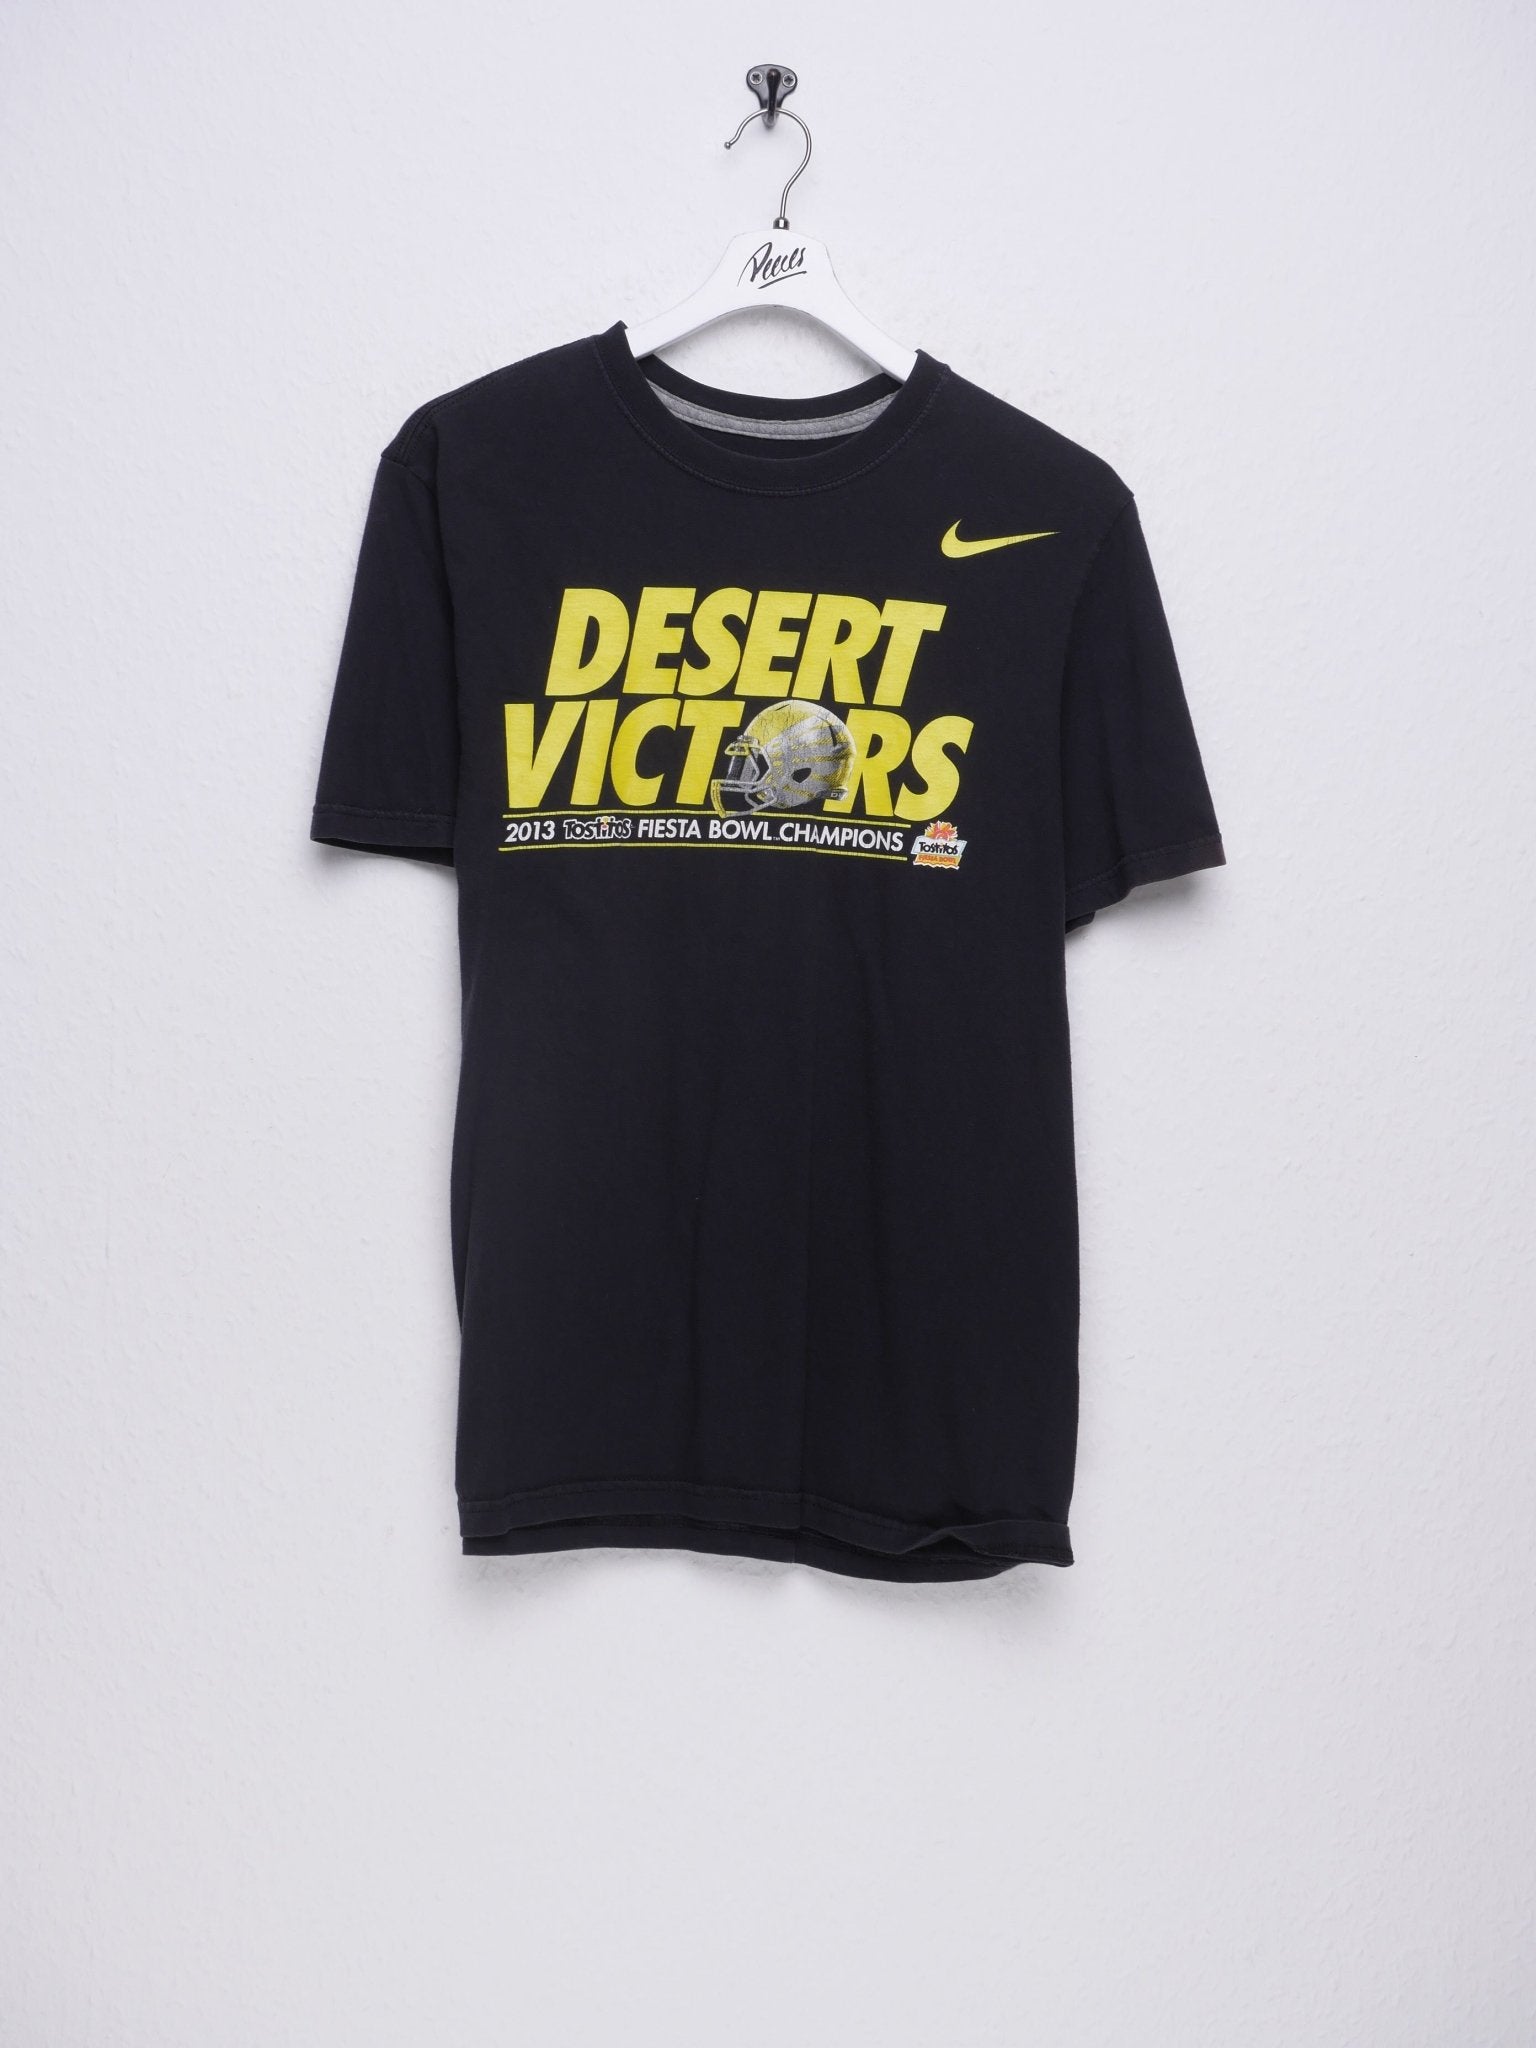 Nike printed Swoosh 'Desert Victors' Shirt - Peeces